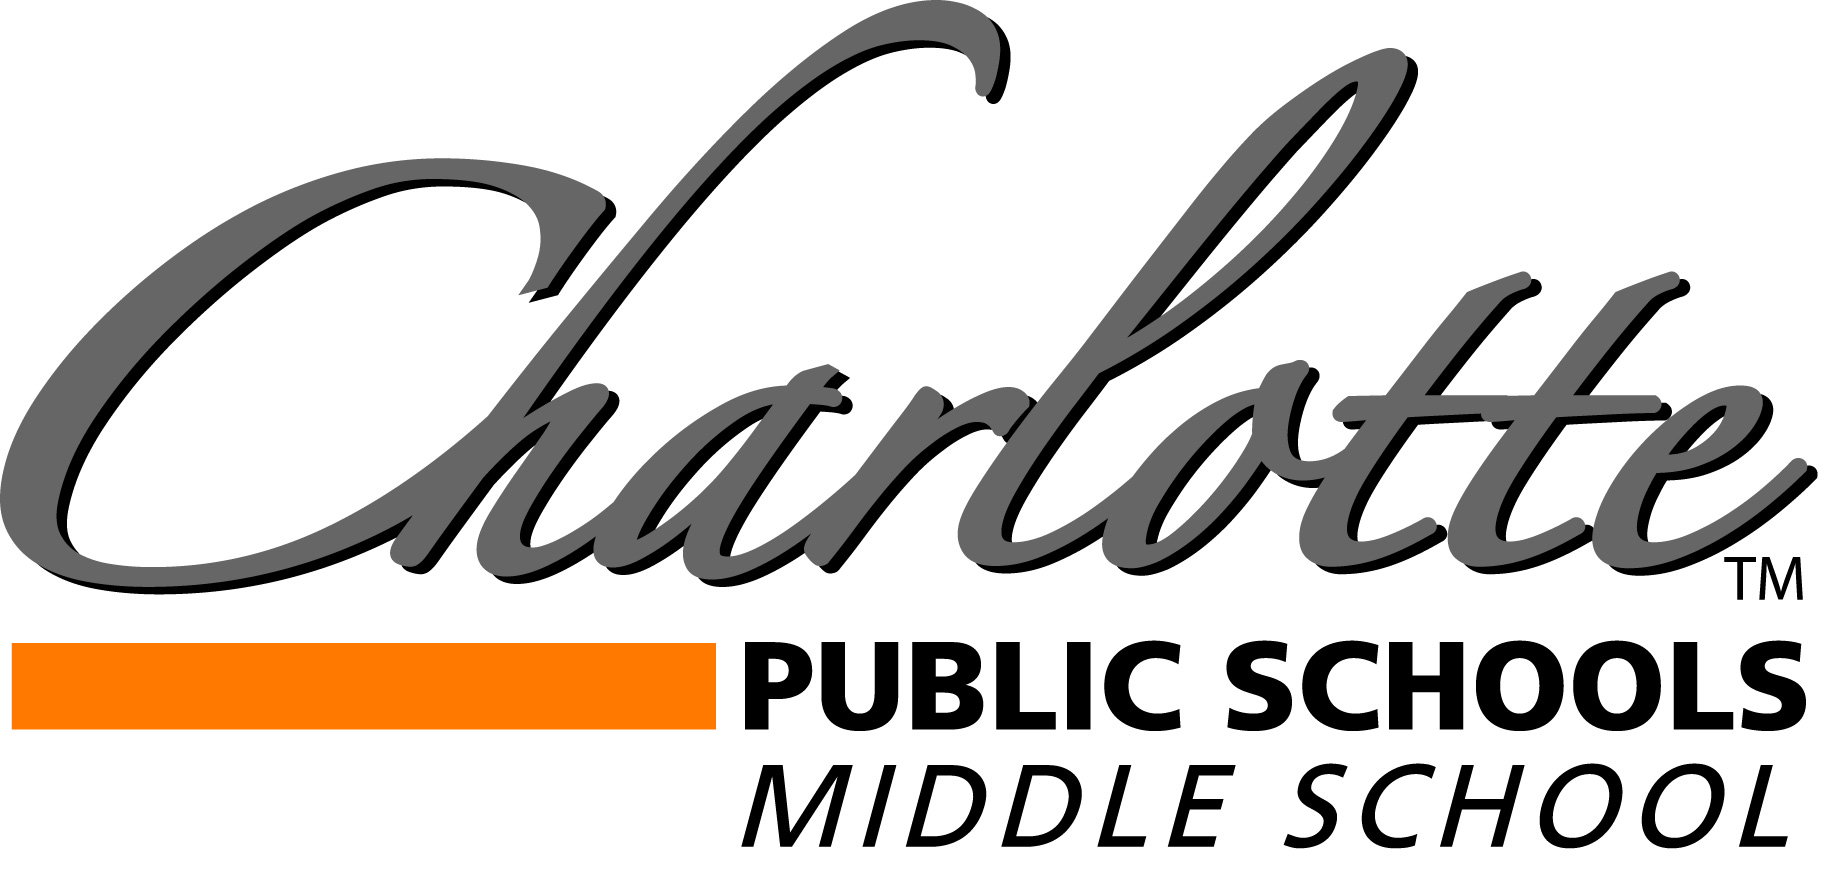 Charlotte Public Schools Middle School